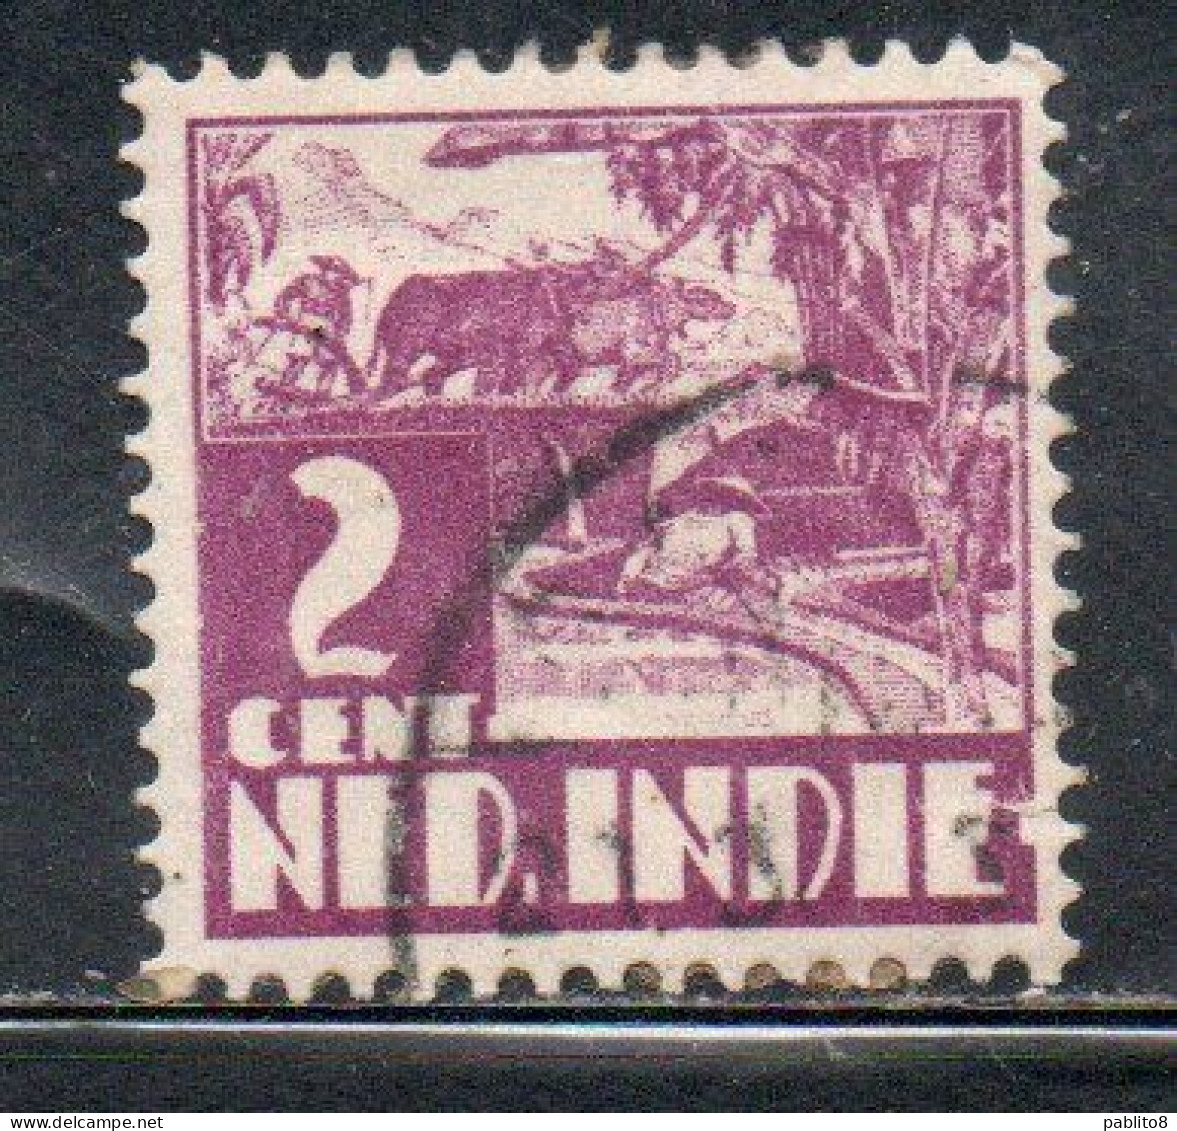 DUTCH INDIA INDIE INDE NEDERLANDS HOLLAND OLANDESE OLANDESI INDIES 1933 1937 RICE FIELD SCENE 2c USED USATO OBLITERE' - Nederlands-Indië